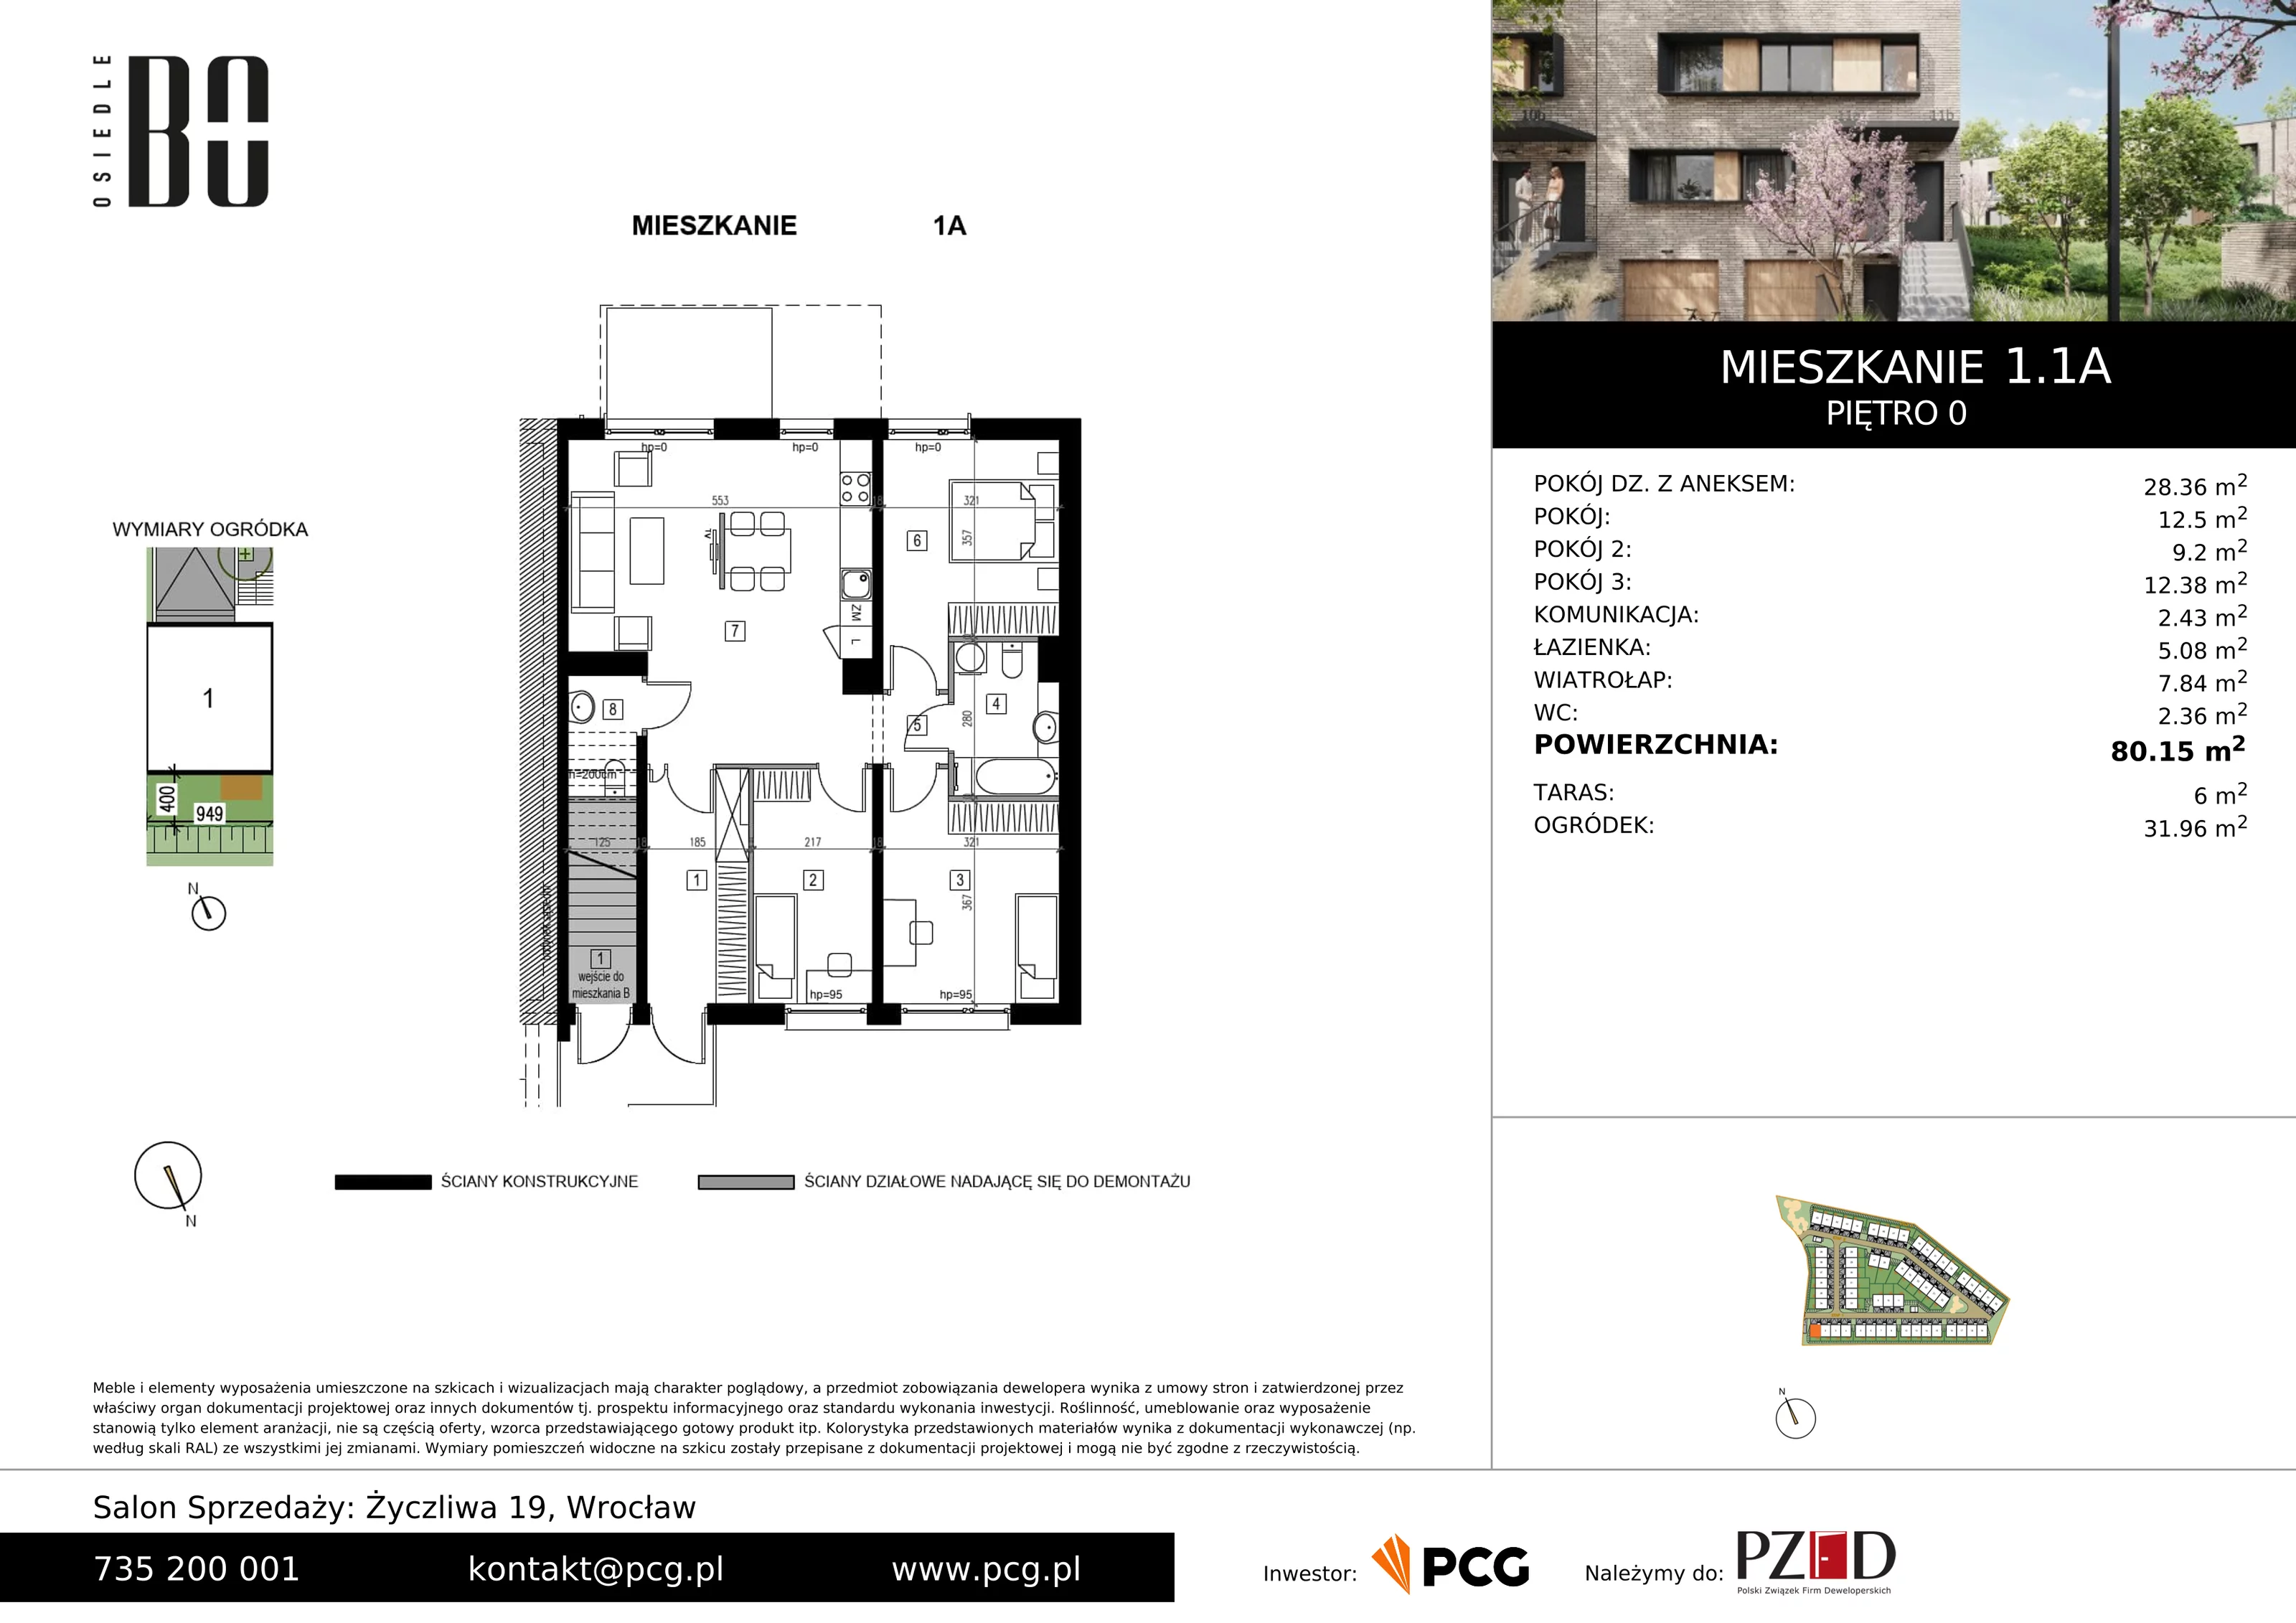 Apartament 80,15 m², parter, oferta nr 1.1A, Osiedle BO, Wrocław, Kowale, ul. Bociana